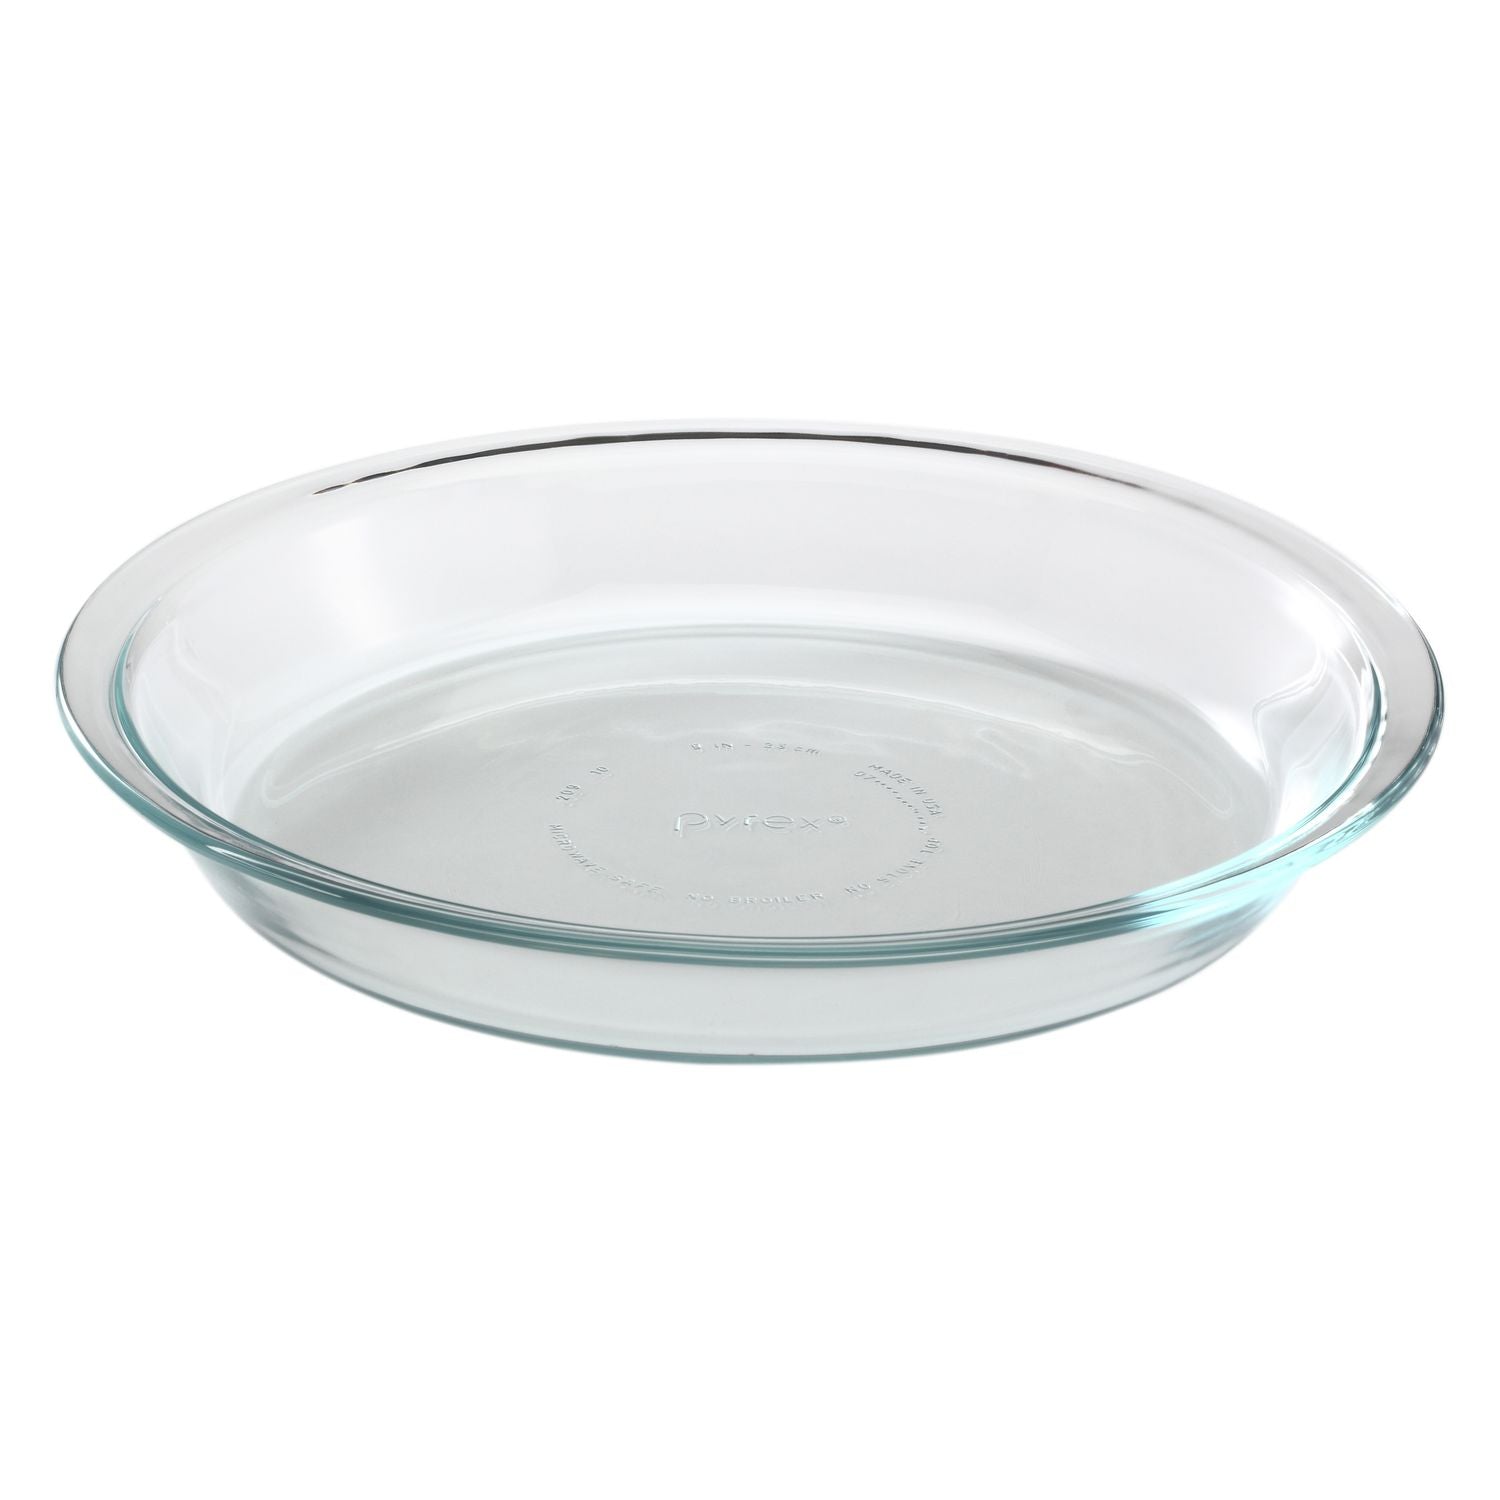 Pyrex Glass Pie Plate - 9"